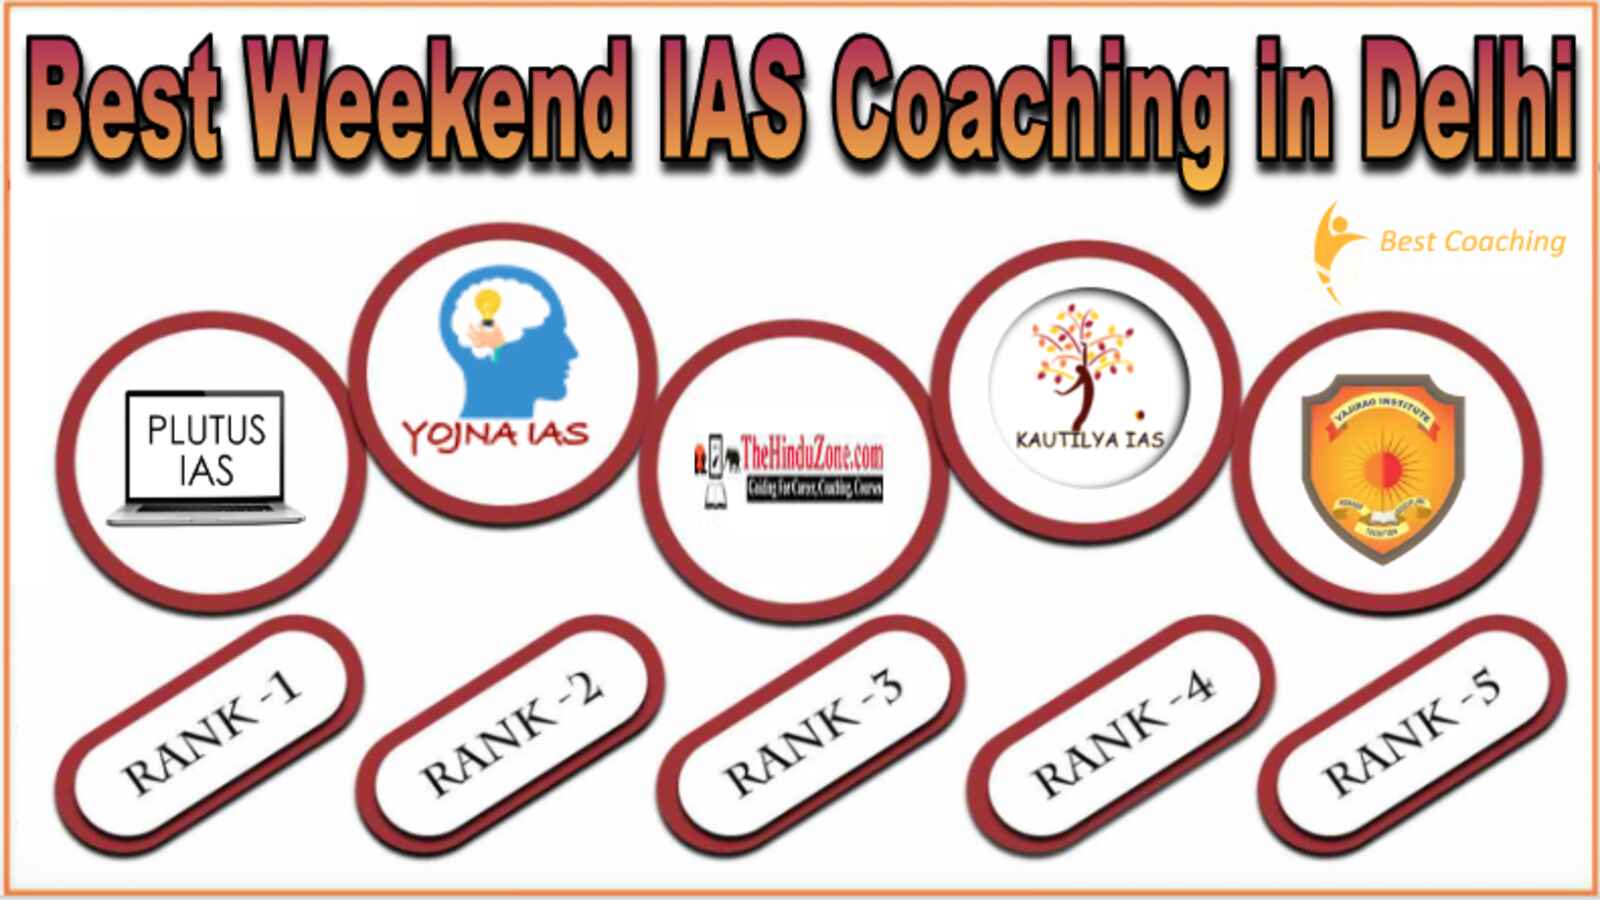 Best weekend IAS Coaching in Delhi